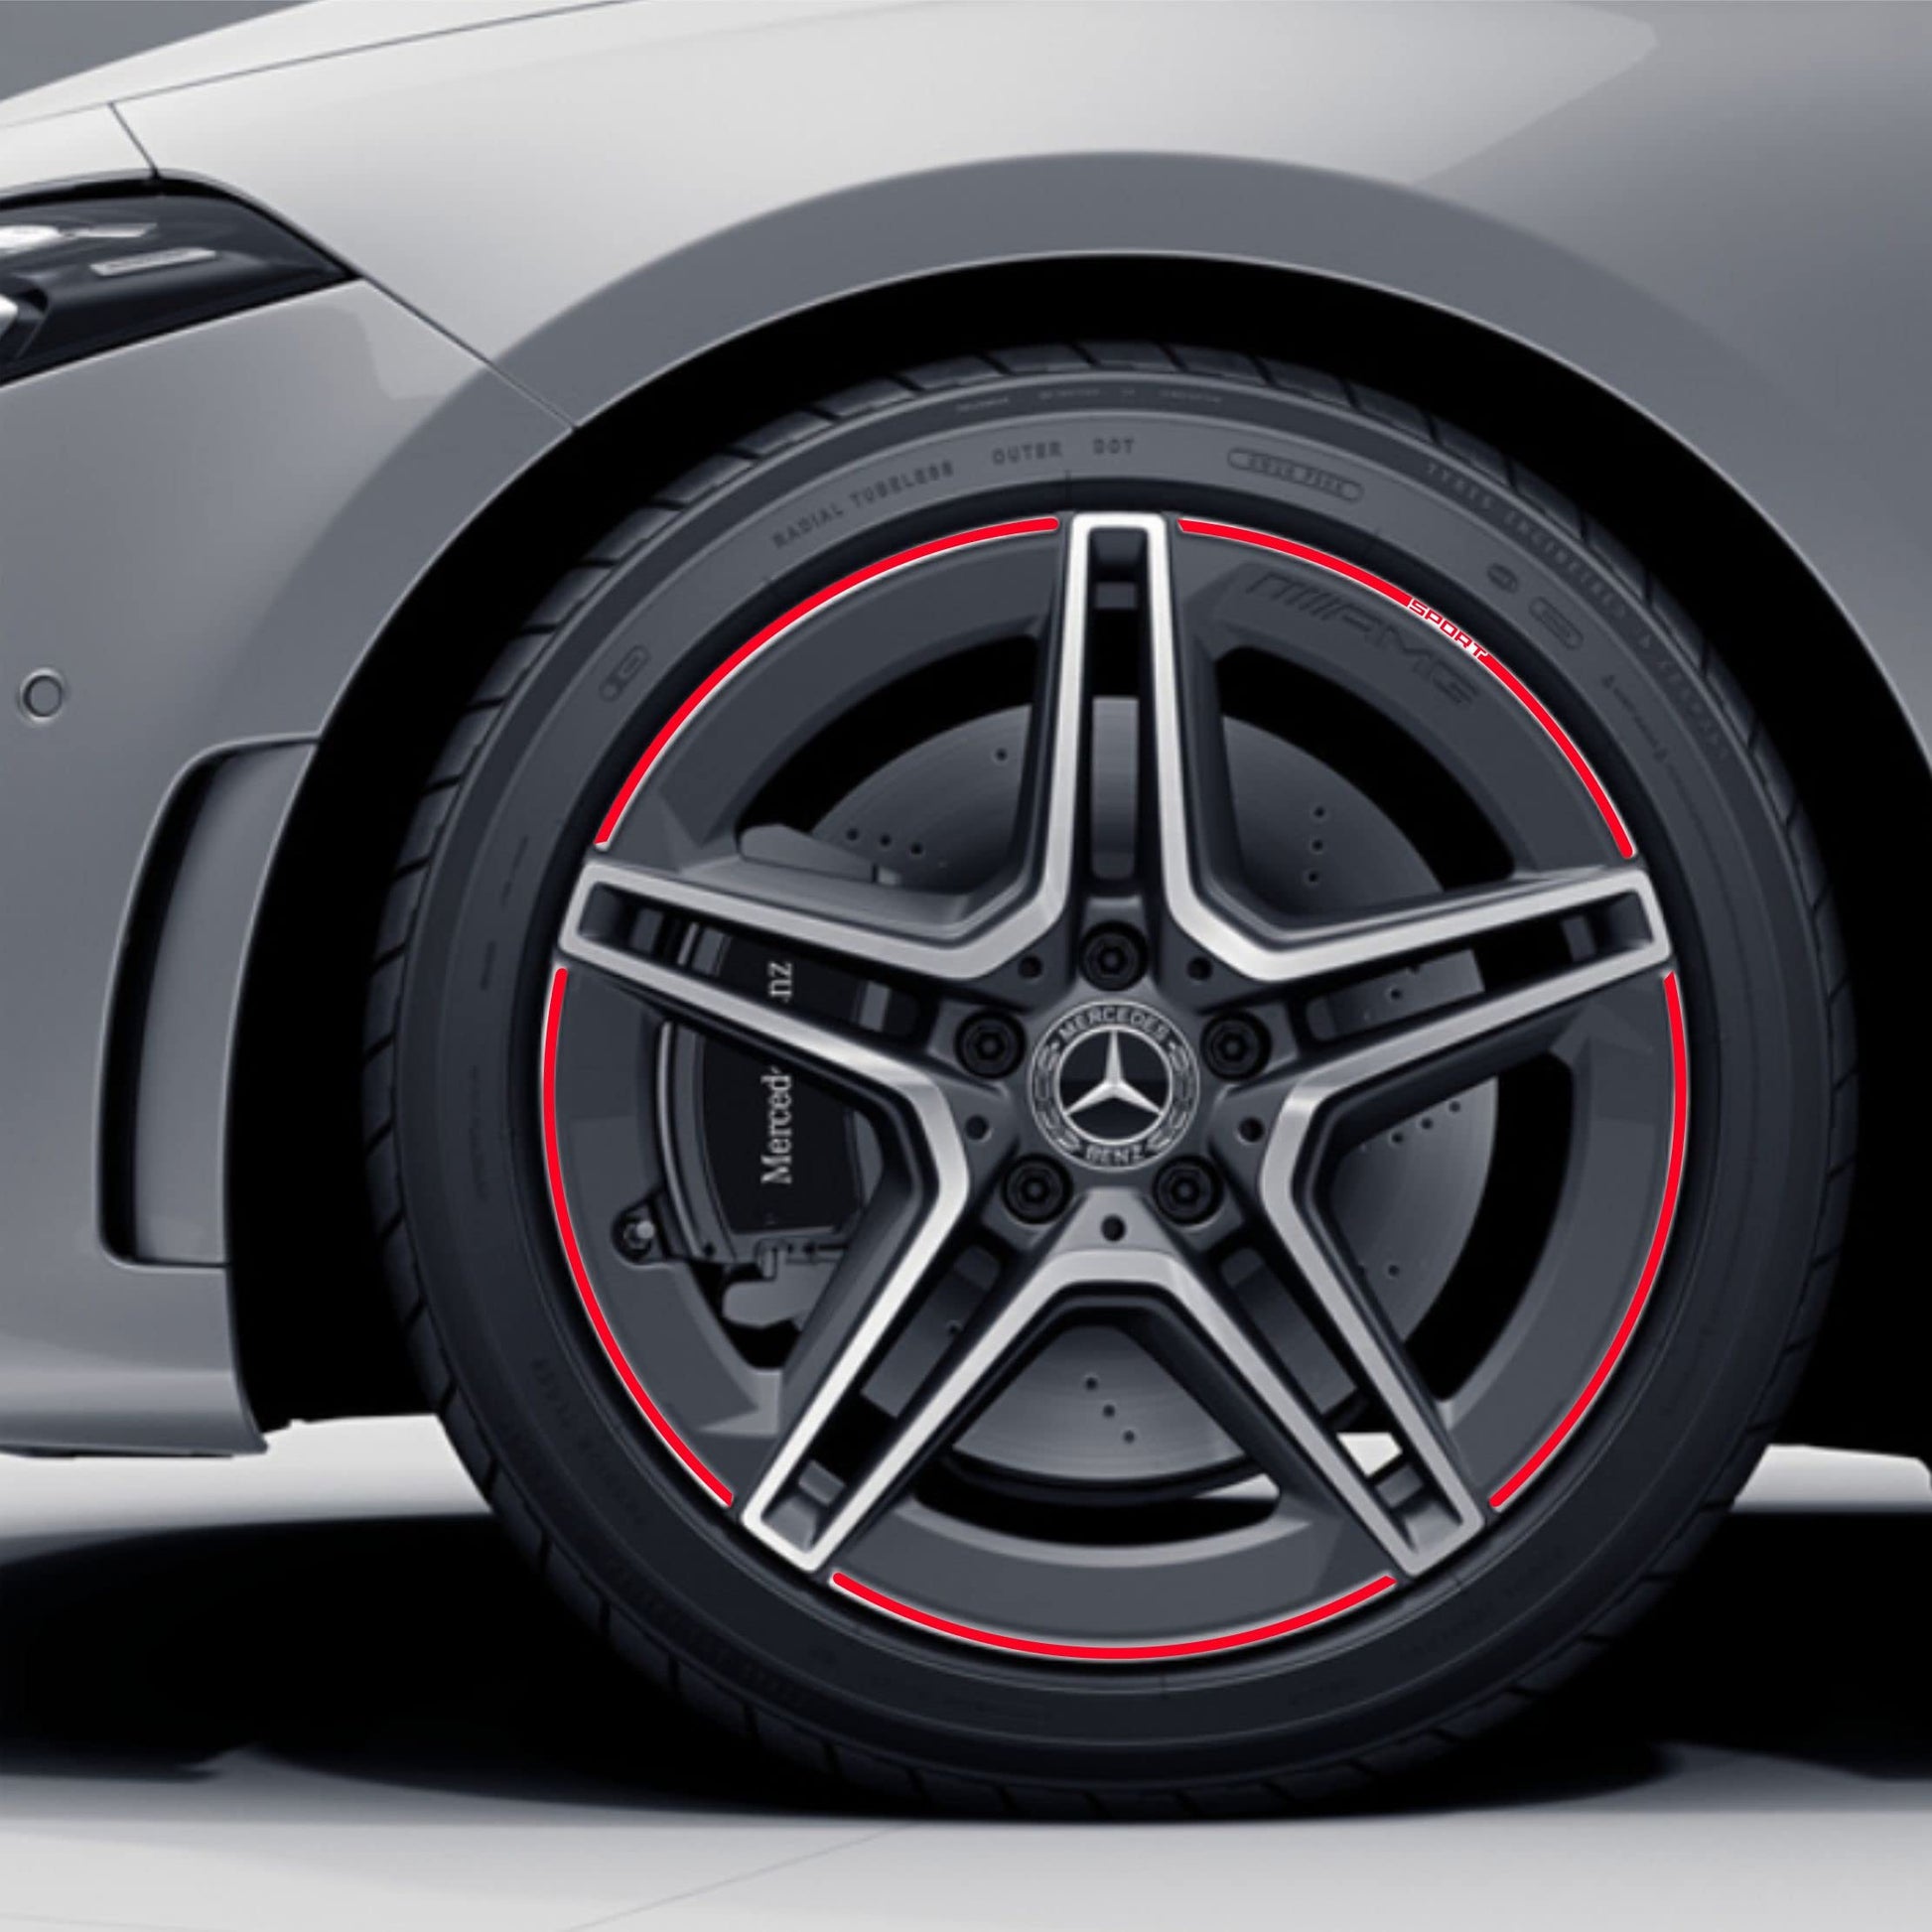 DualColorStampe Adesivi strisce cerchi compatibili con Mercedes-Benz AMG Cerchi in lega 18'' ruota cerchioni strisce stickers adesivi auto sport COD. 0337 a €16.99 solo da DualColorStampe